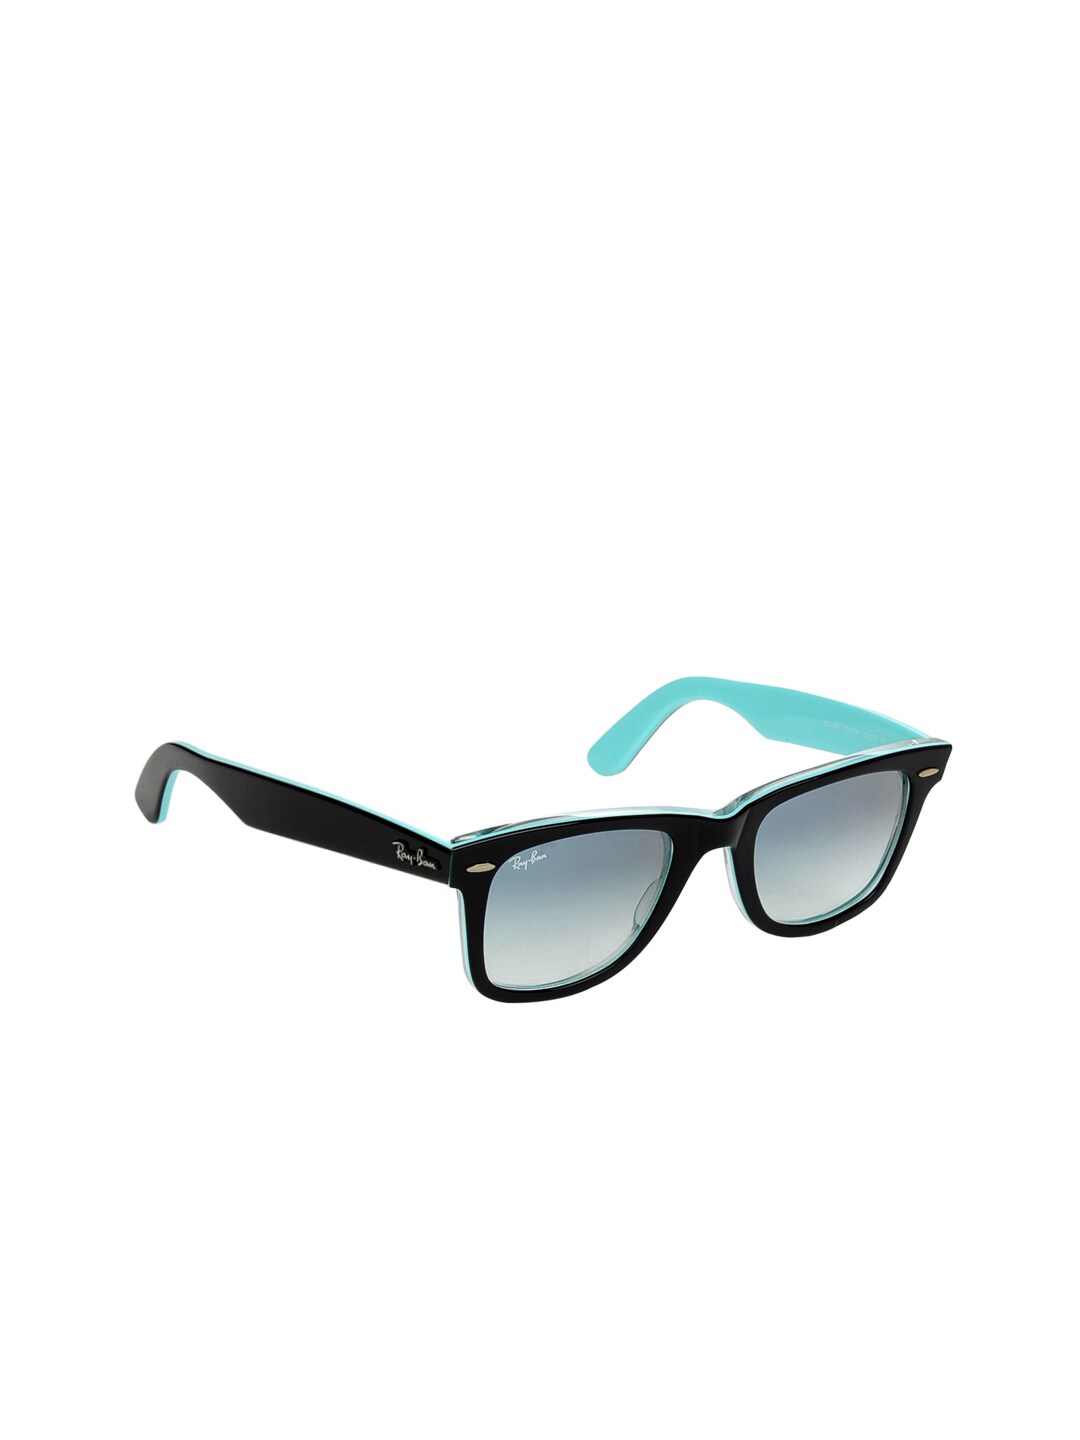 Ray-Ban Men Wayfarer Sunglasses